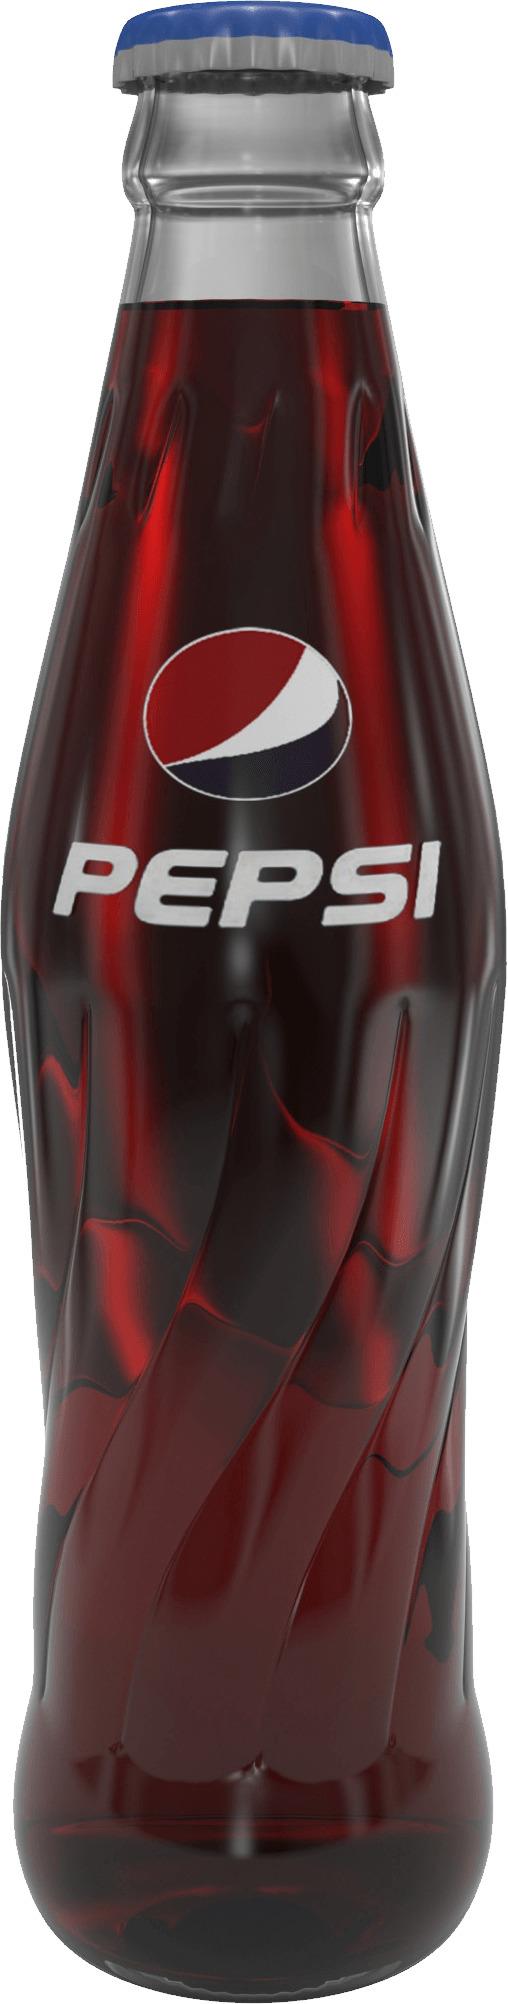 Glass Bottle Classic Pepsi png transparent